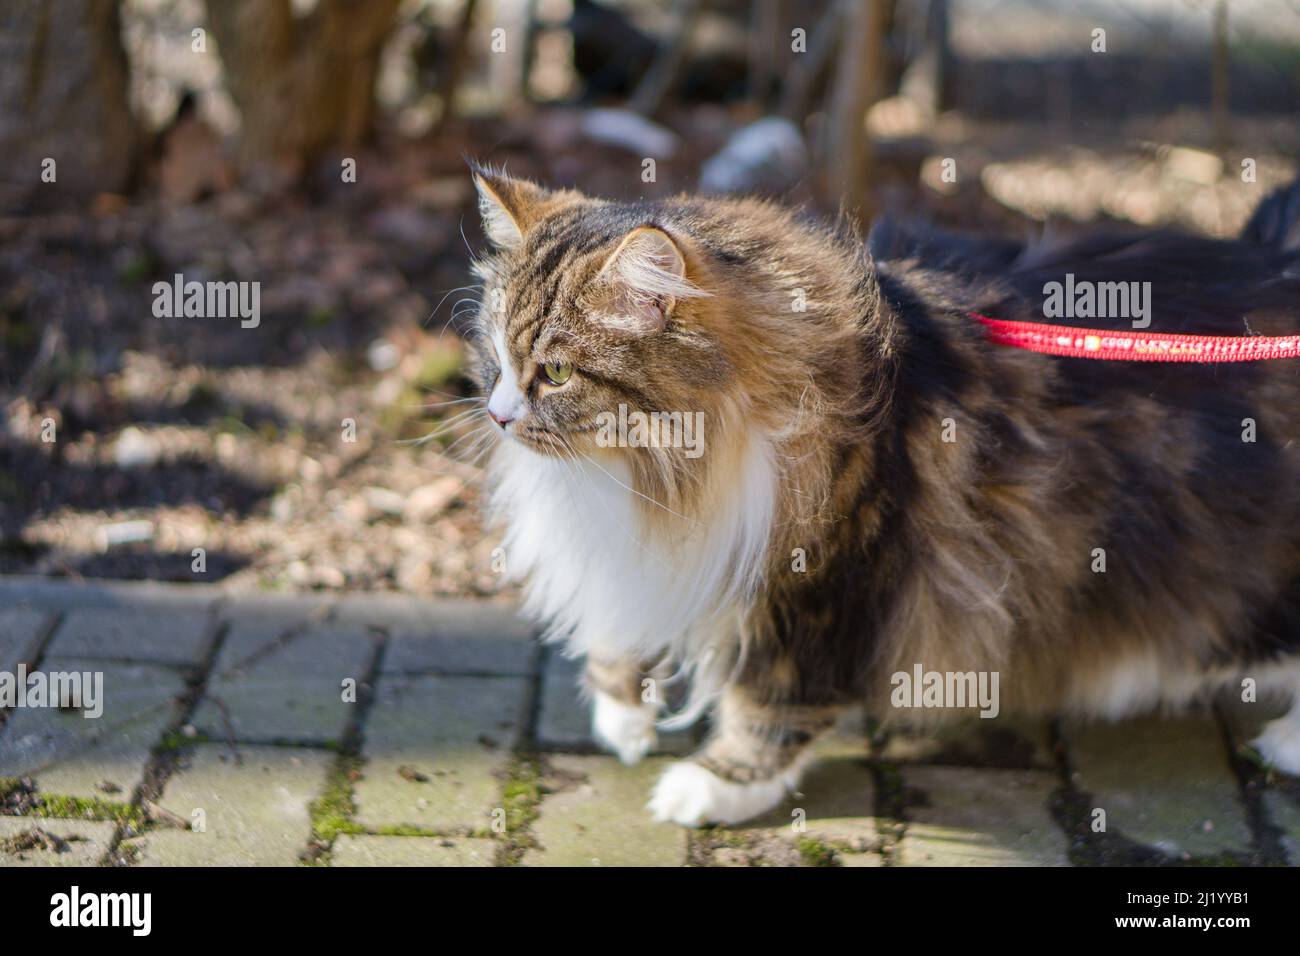 Alvin - Big cat on a leash on a walk Stock Photo